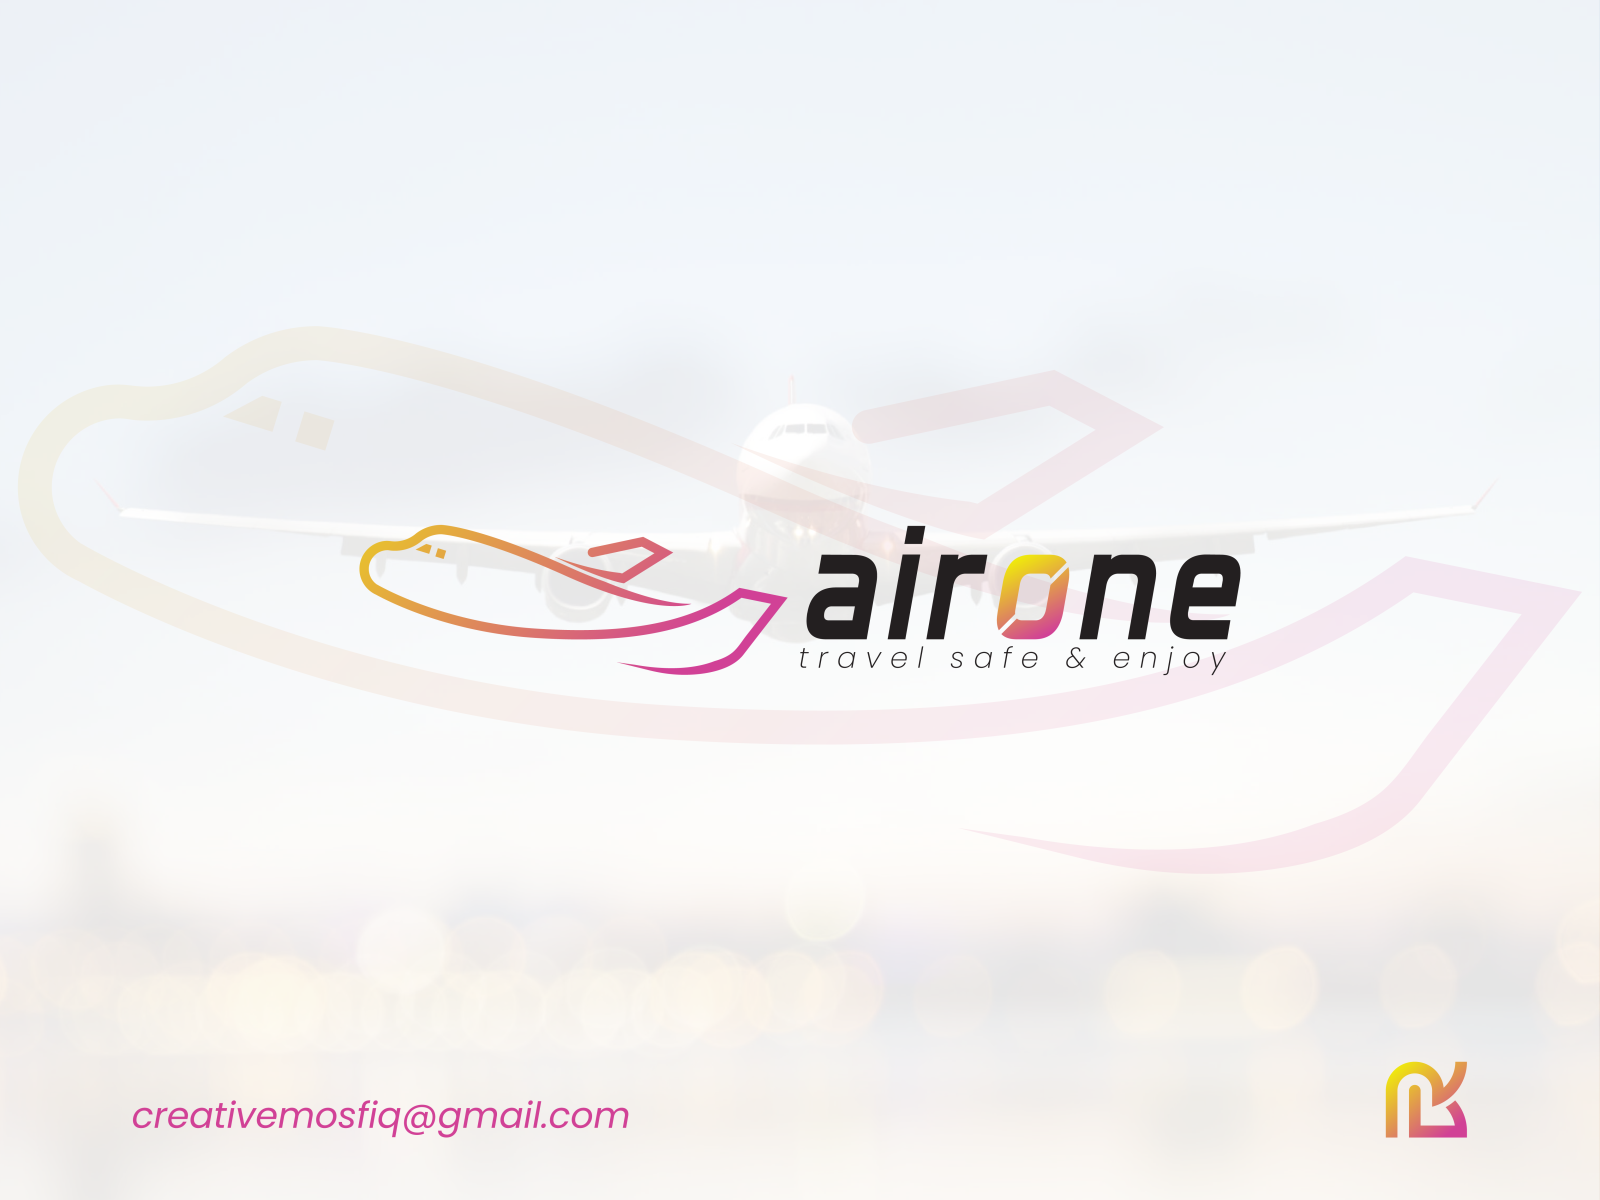 airone travel